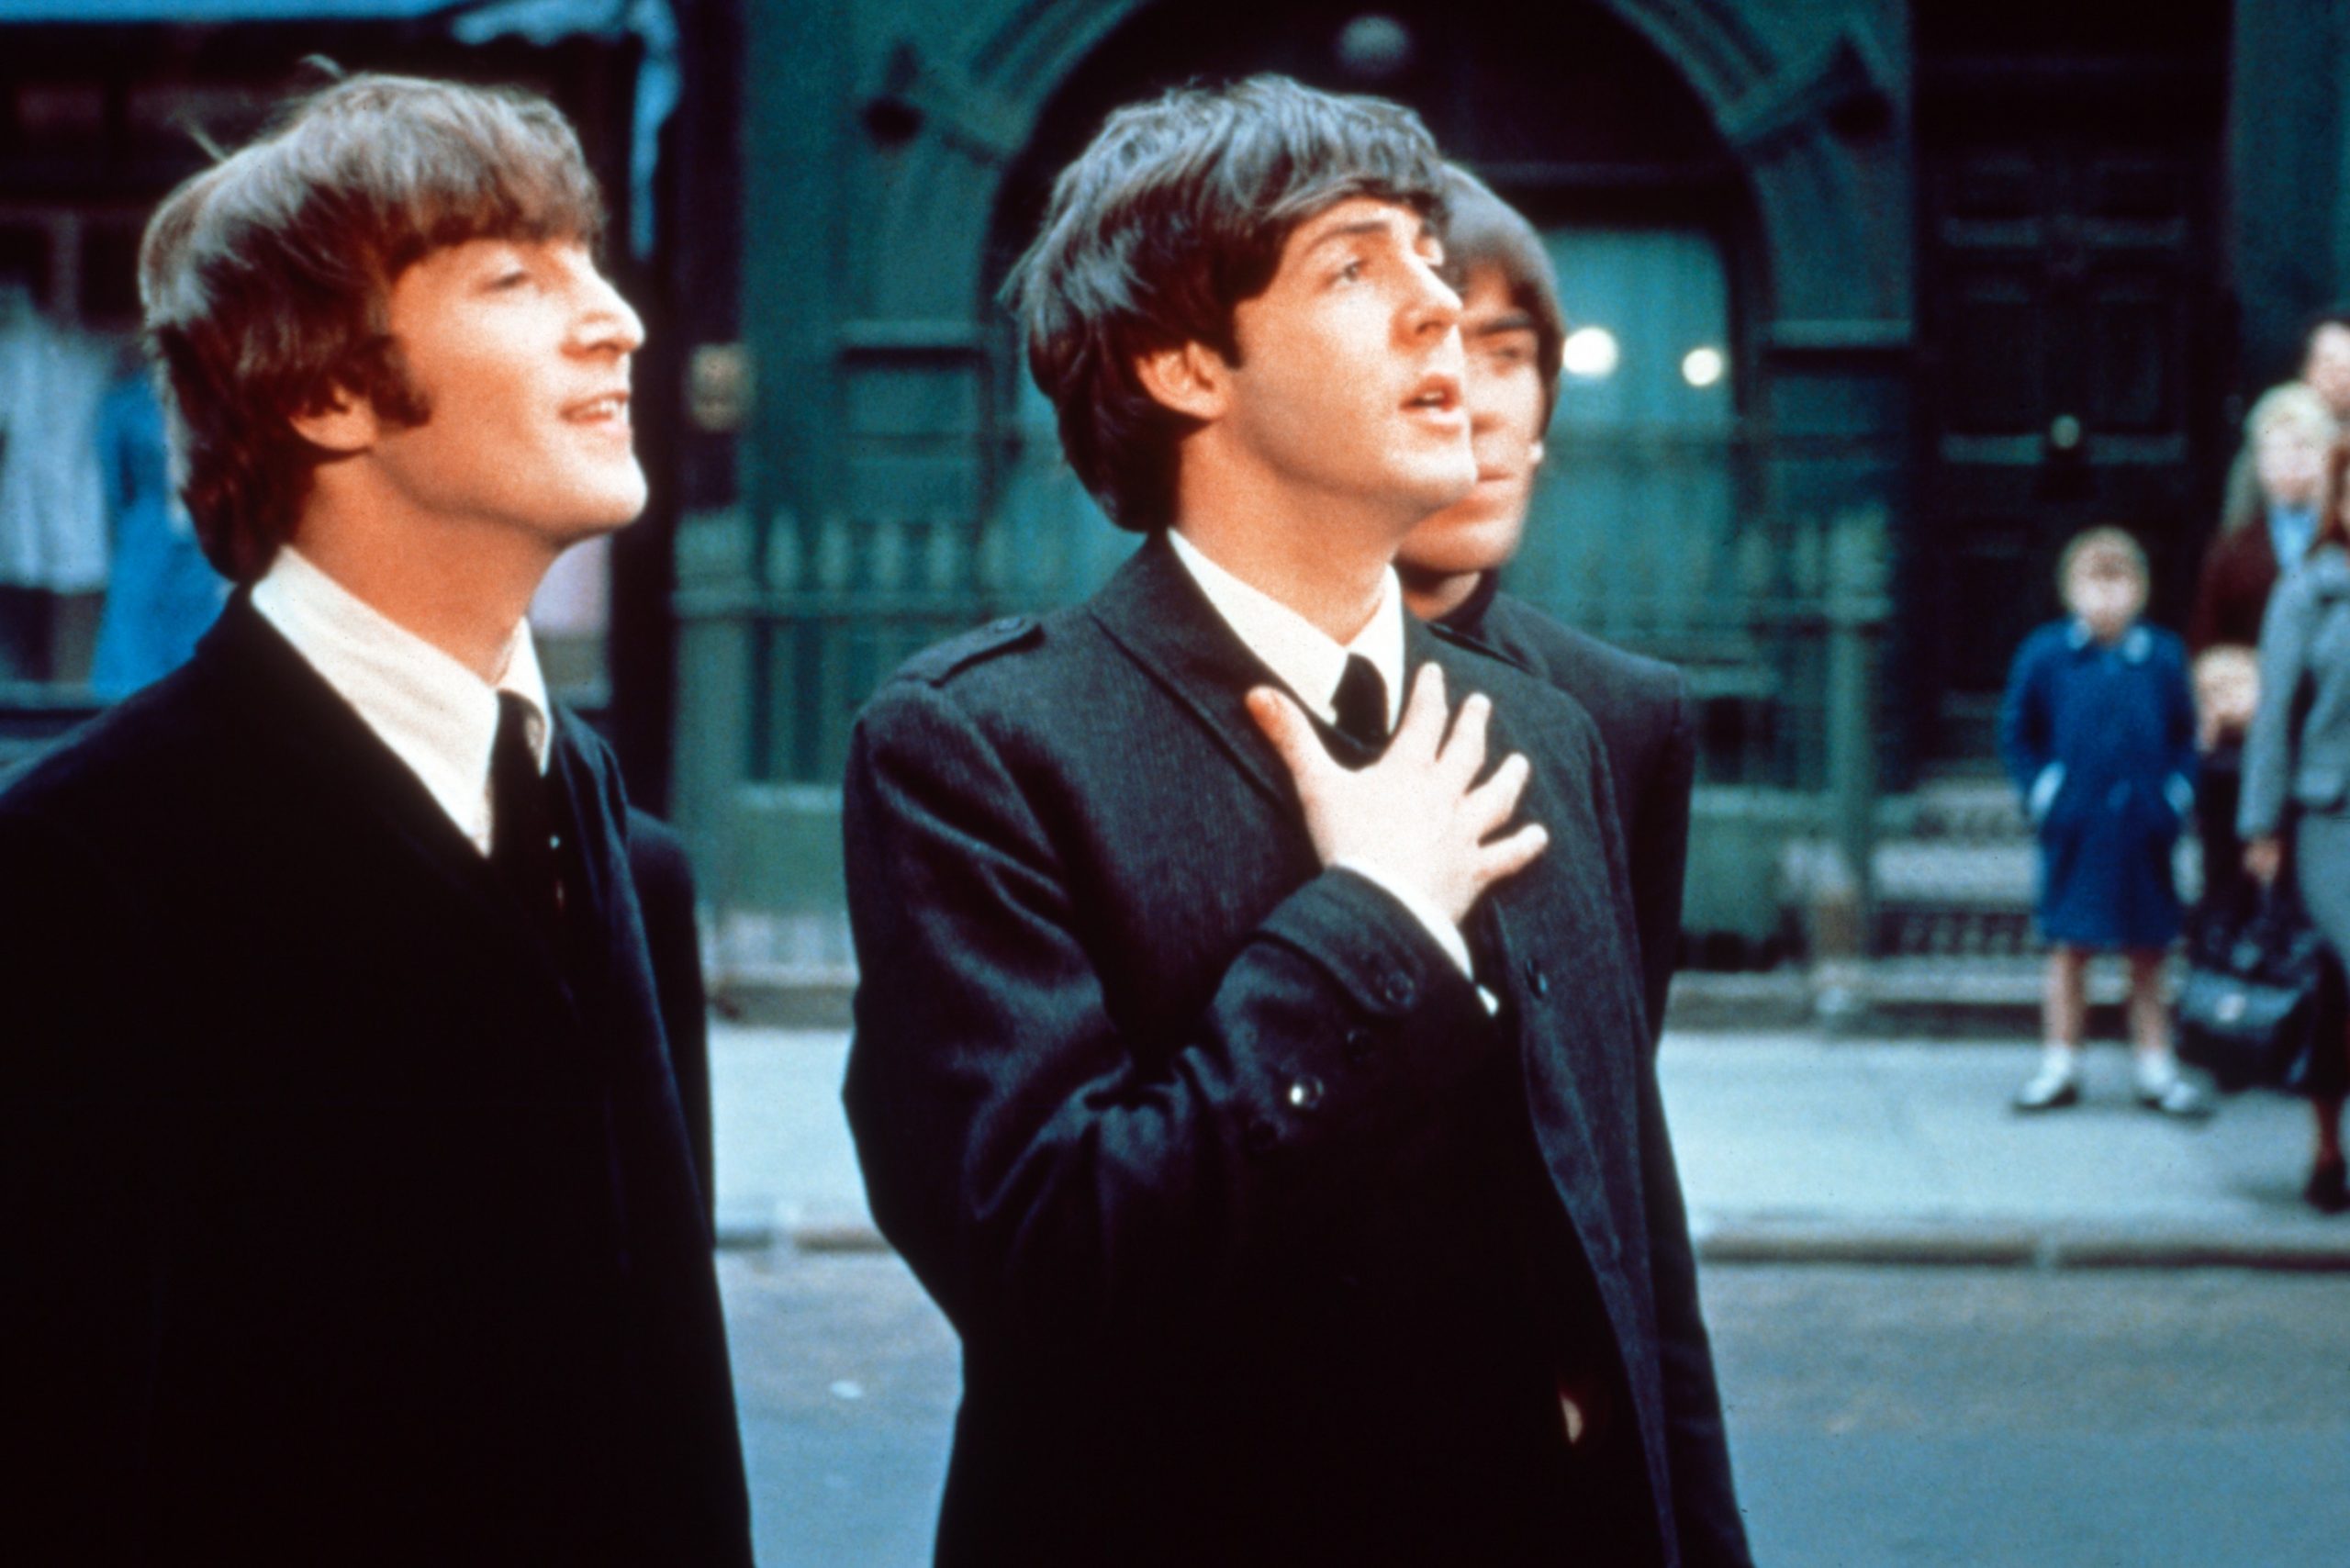 John Lennon and Paul McCartney for A Hard Day's Night